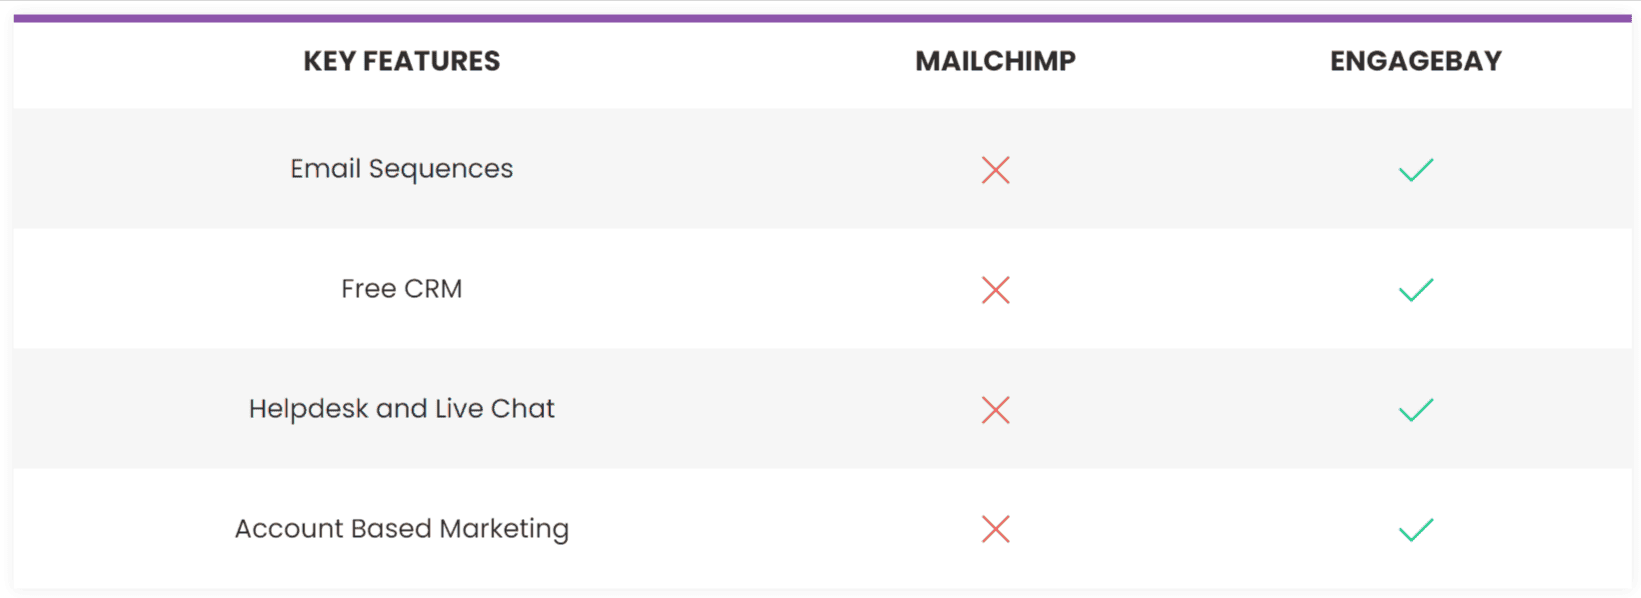 Mailchimp vs EngageBay